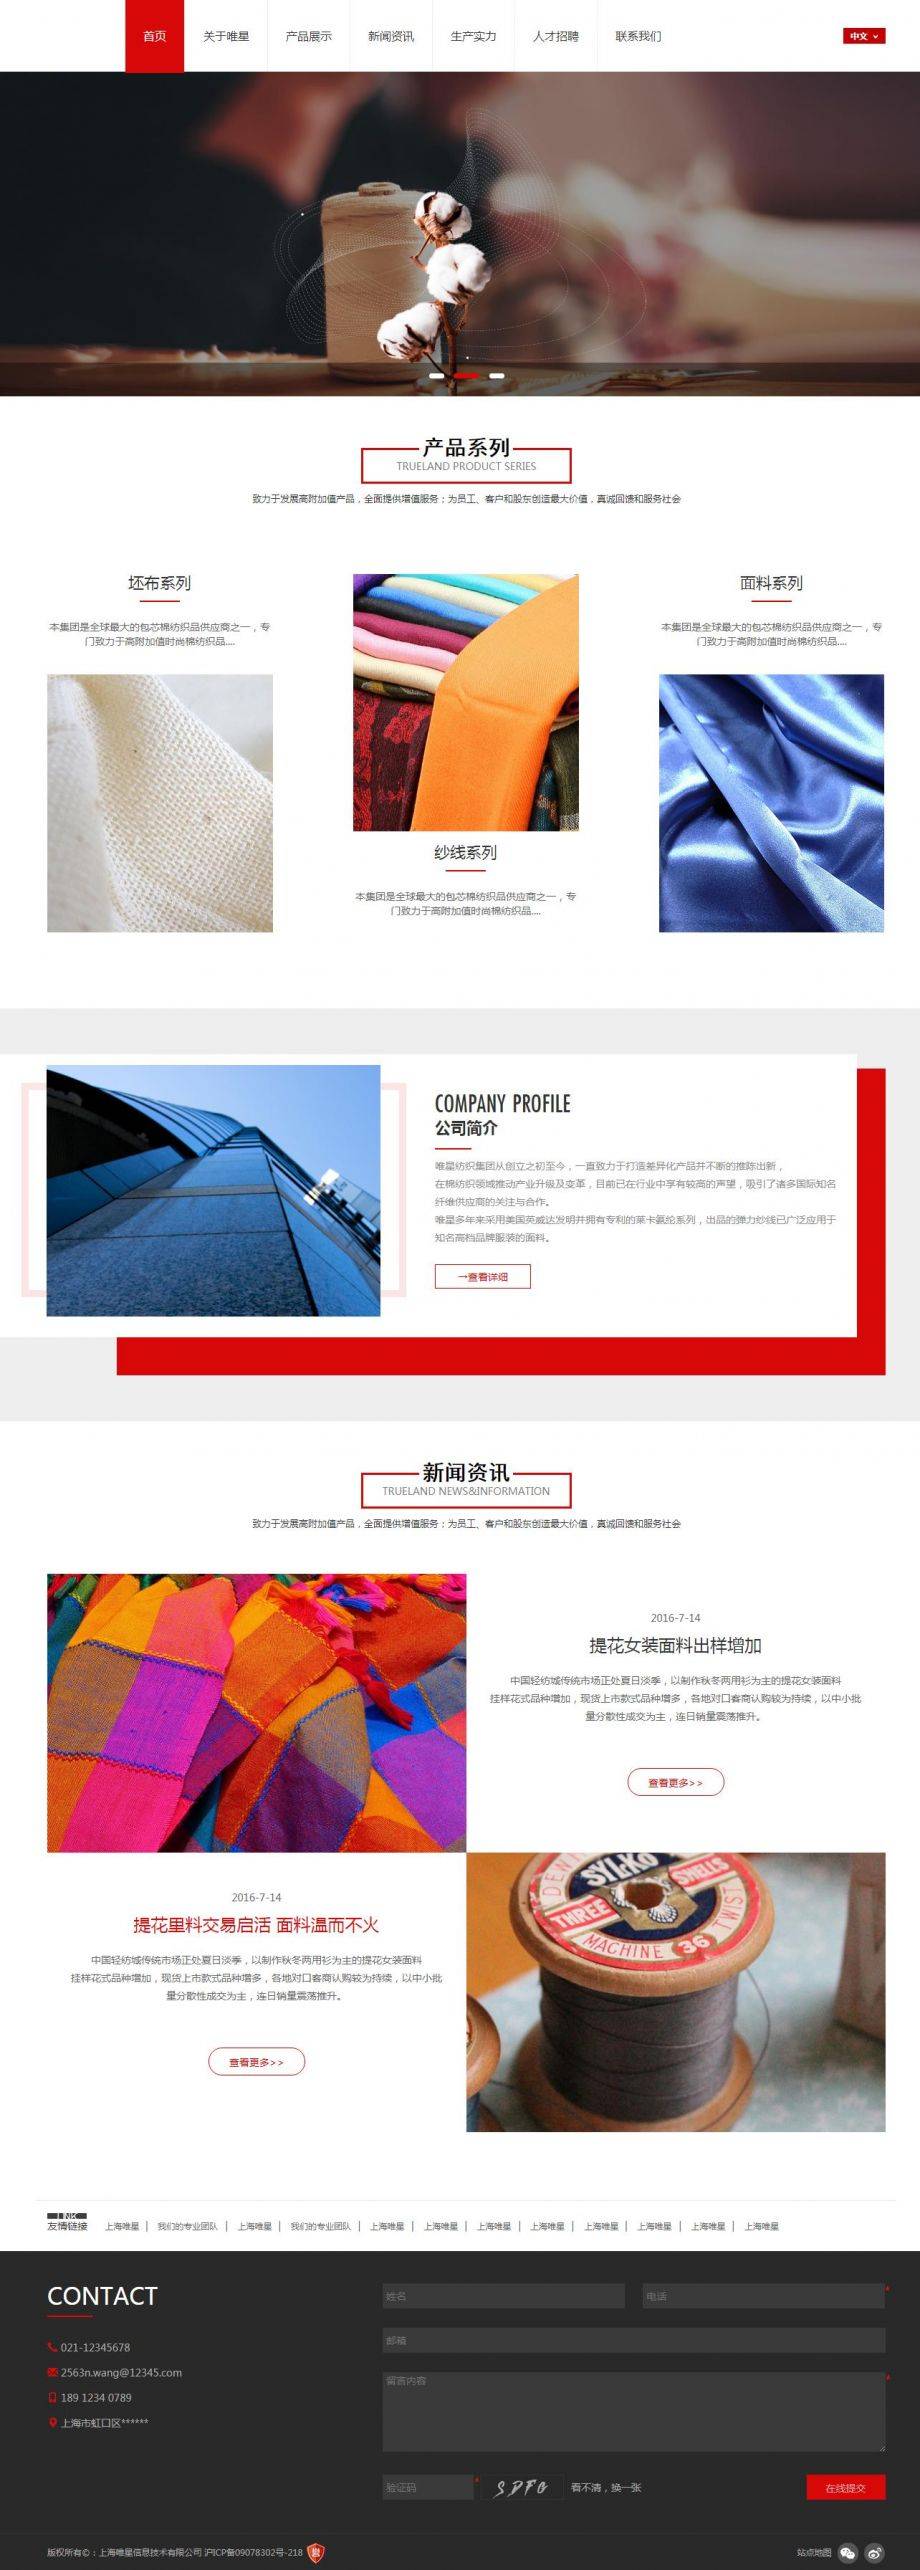 HTML服装生产厂商/布艺加工企业模板